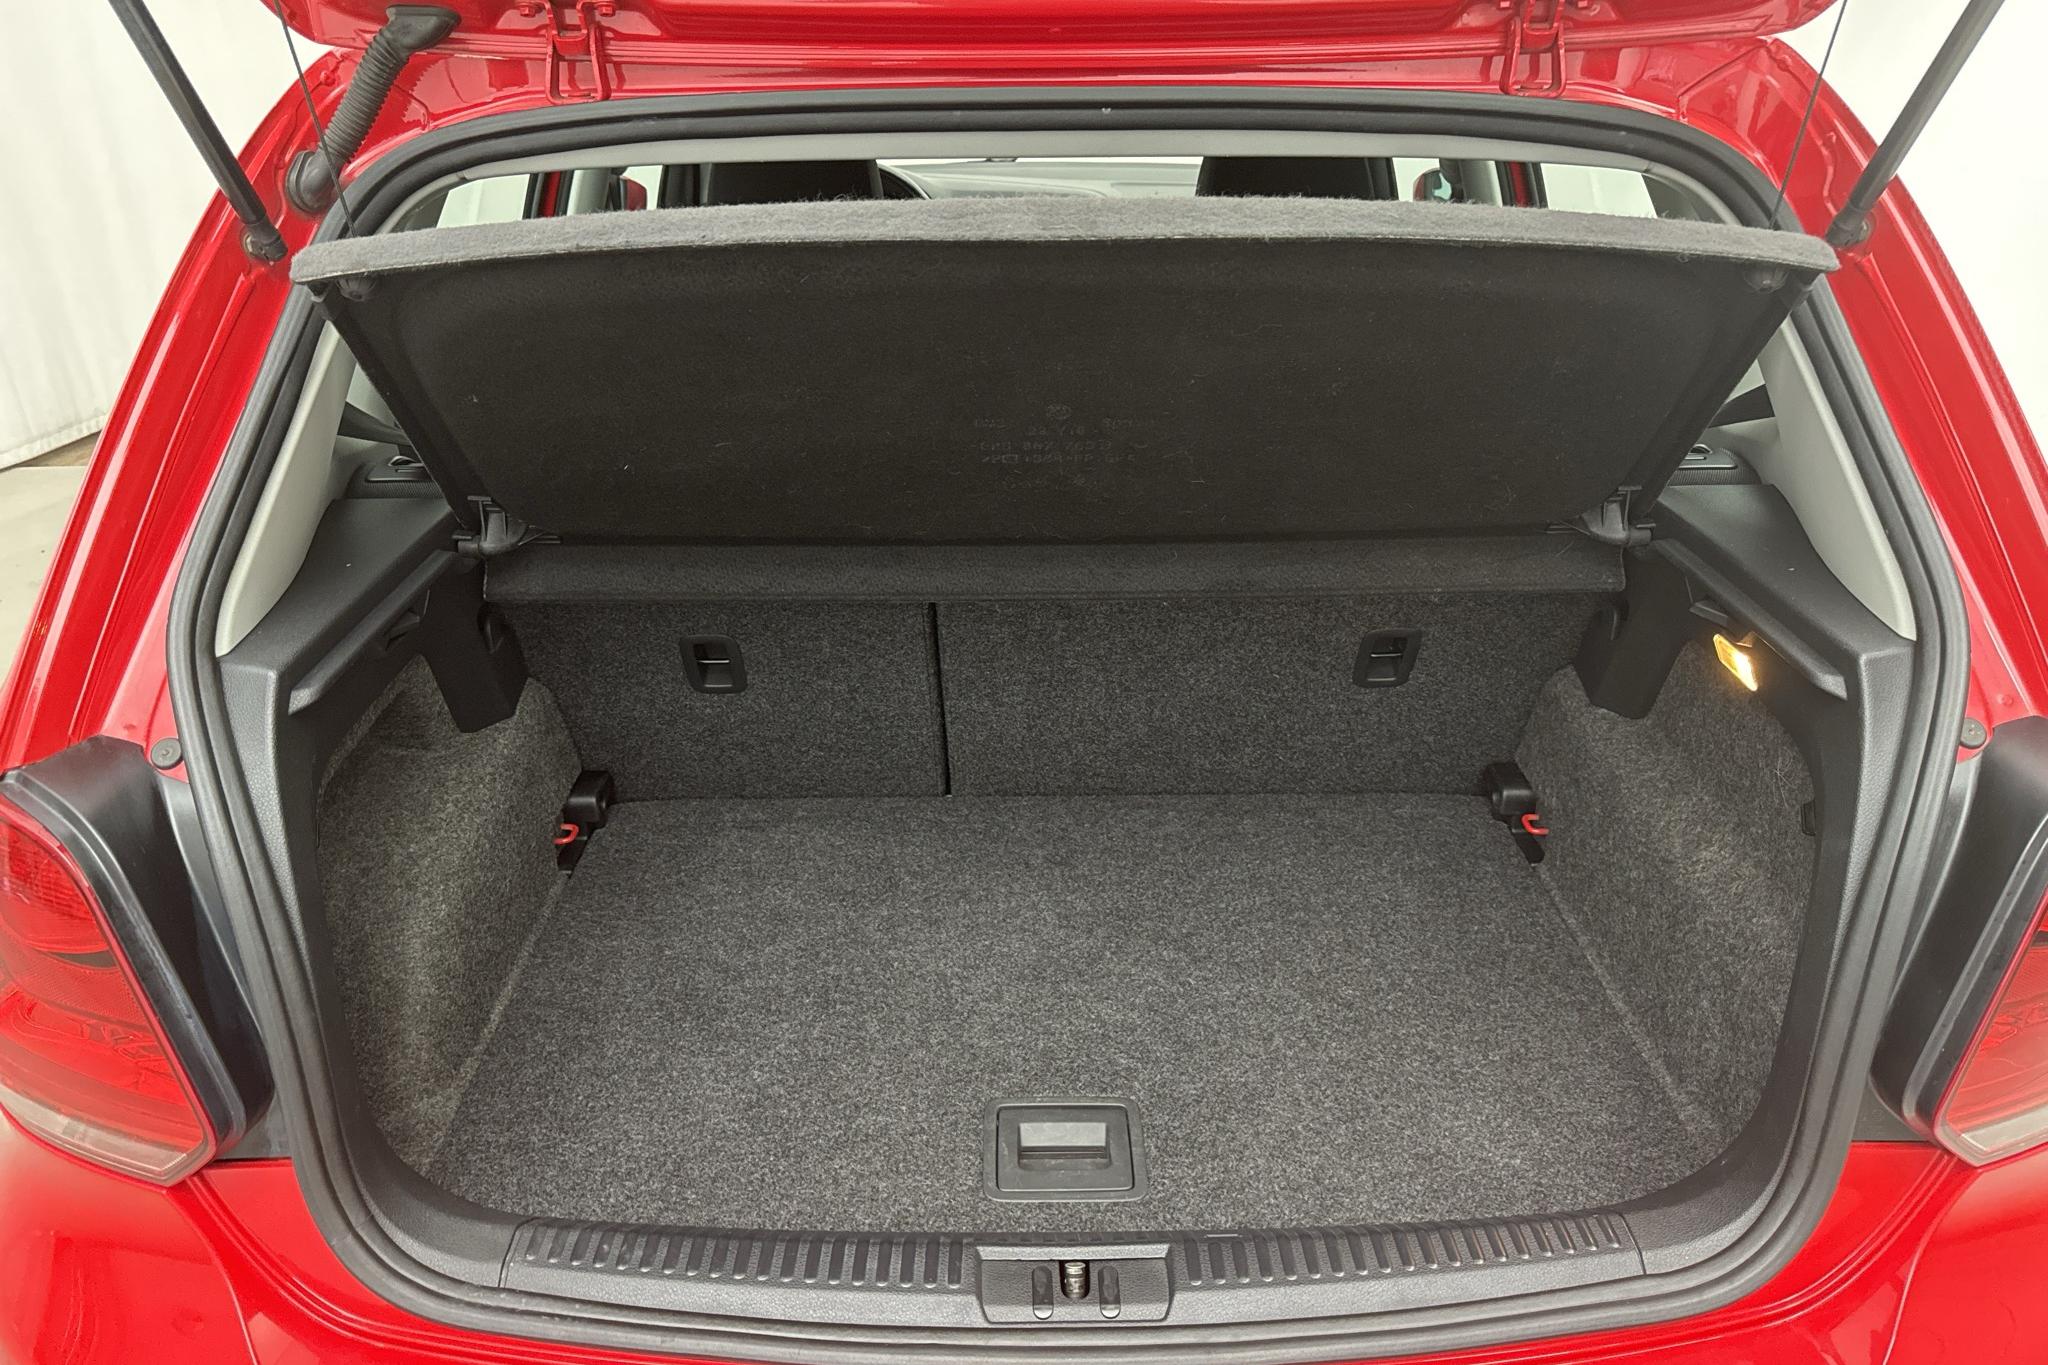 VW Polo 1.4 5dr (85hk) - 94 590 km - Manuaalinen - punainen - 2011